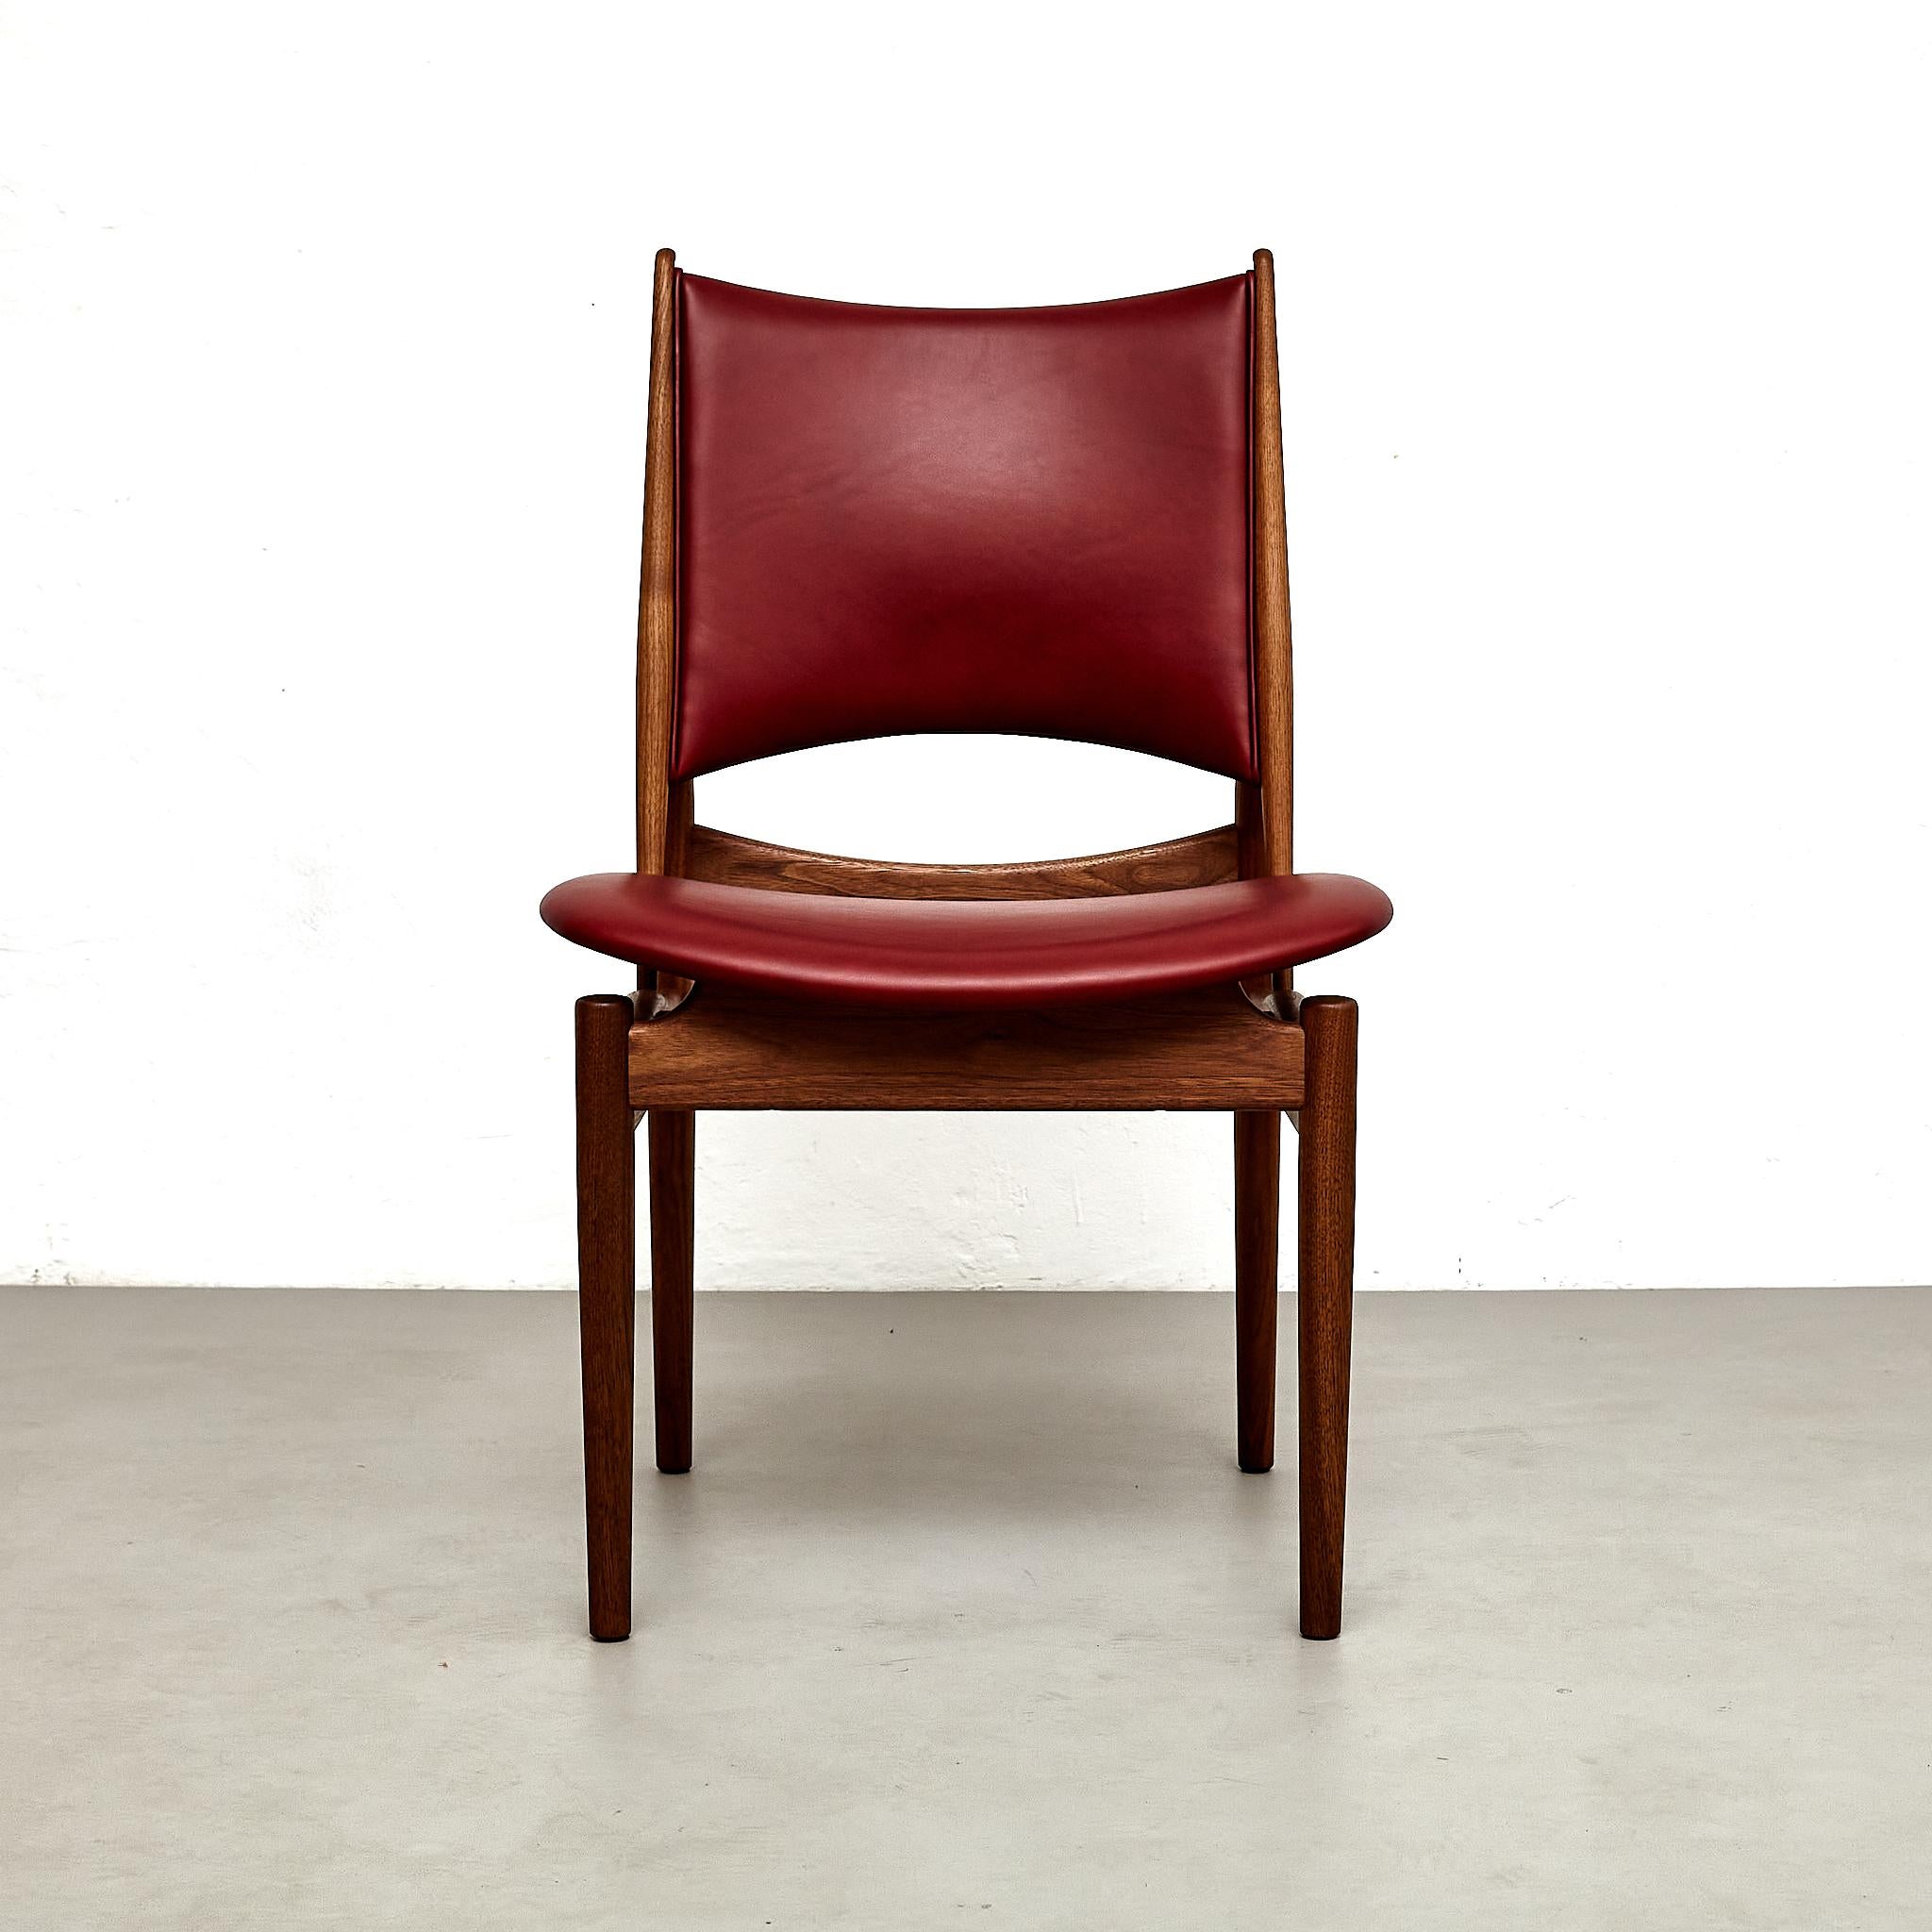 Scandinavian Modern Finn Juhl Egyptian Chair in Walnut Wood and Dark Red Leather For Sale